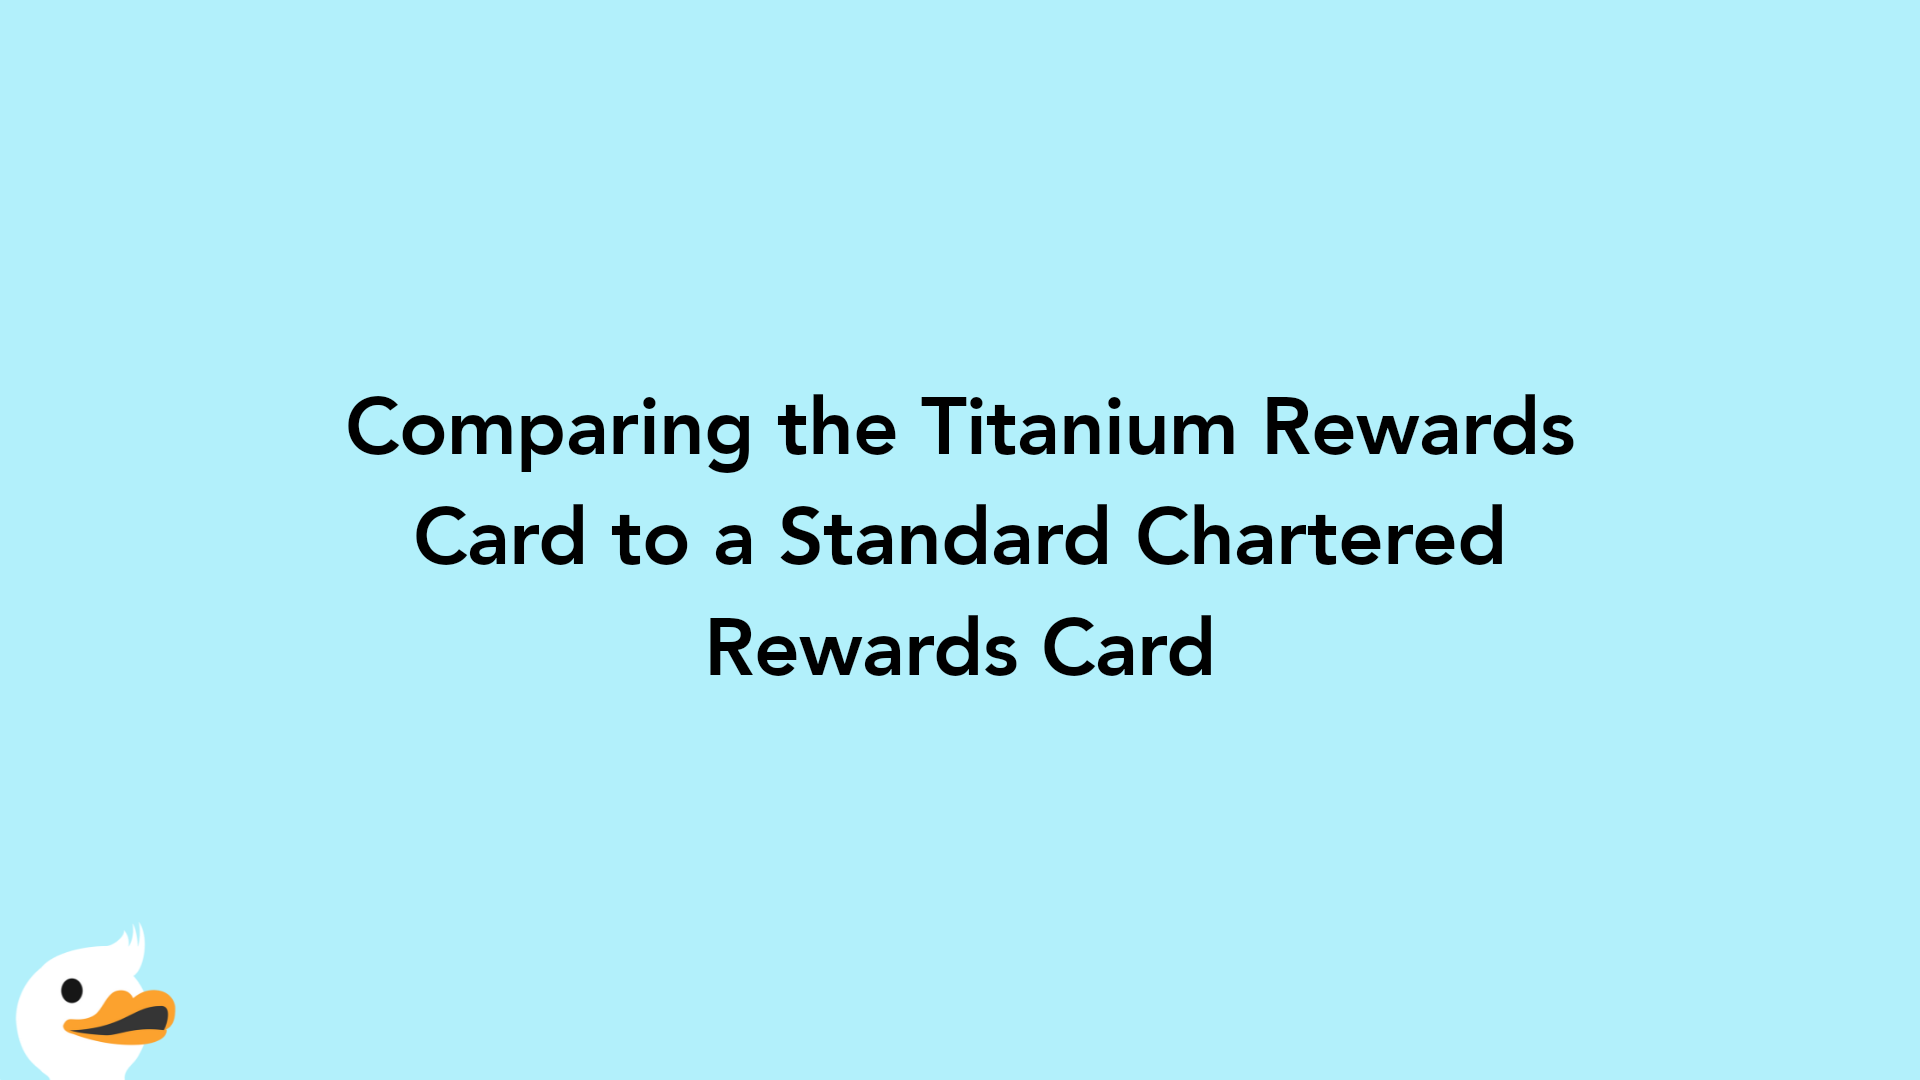 Comparing the Titanium Rewards Card to a Standard Chartered Rewards Card